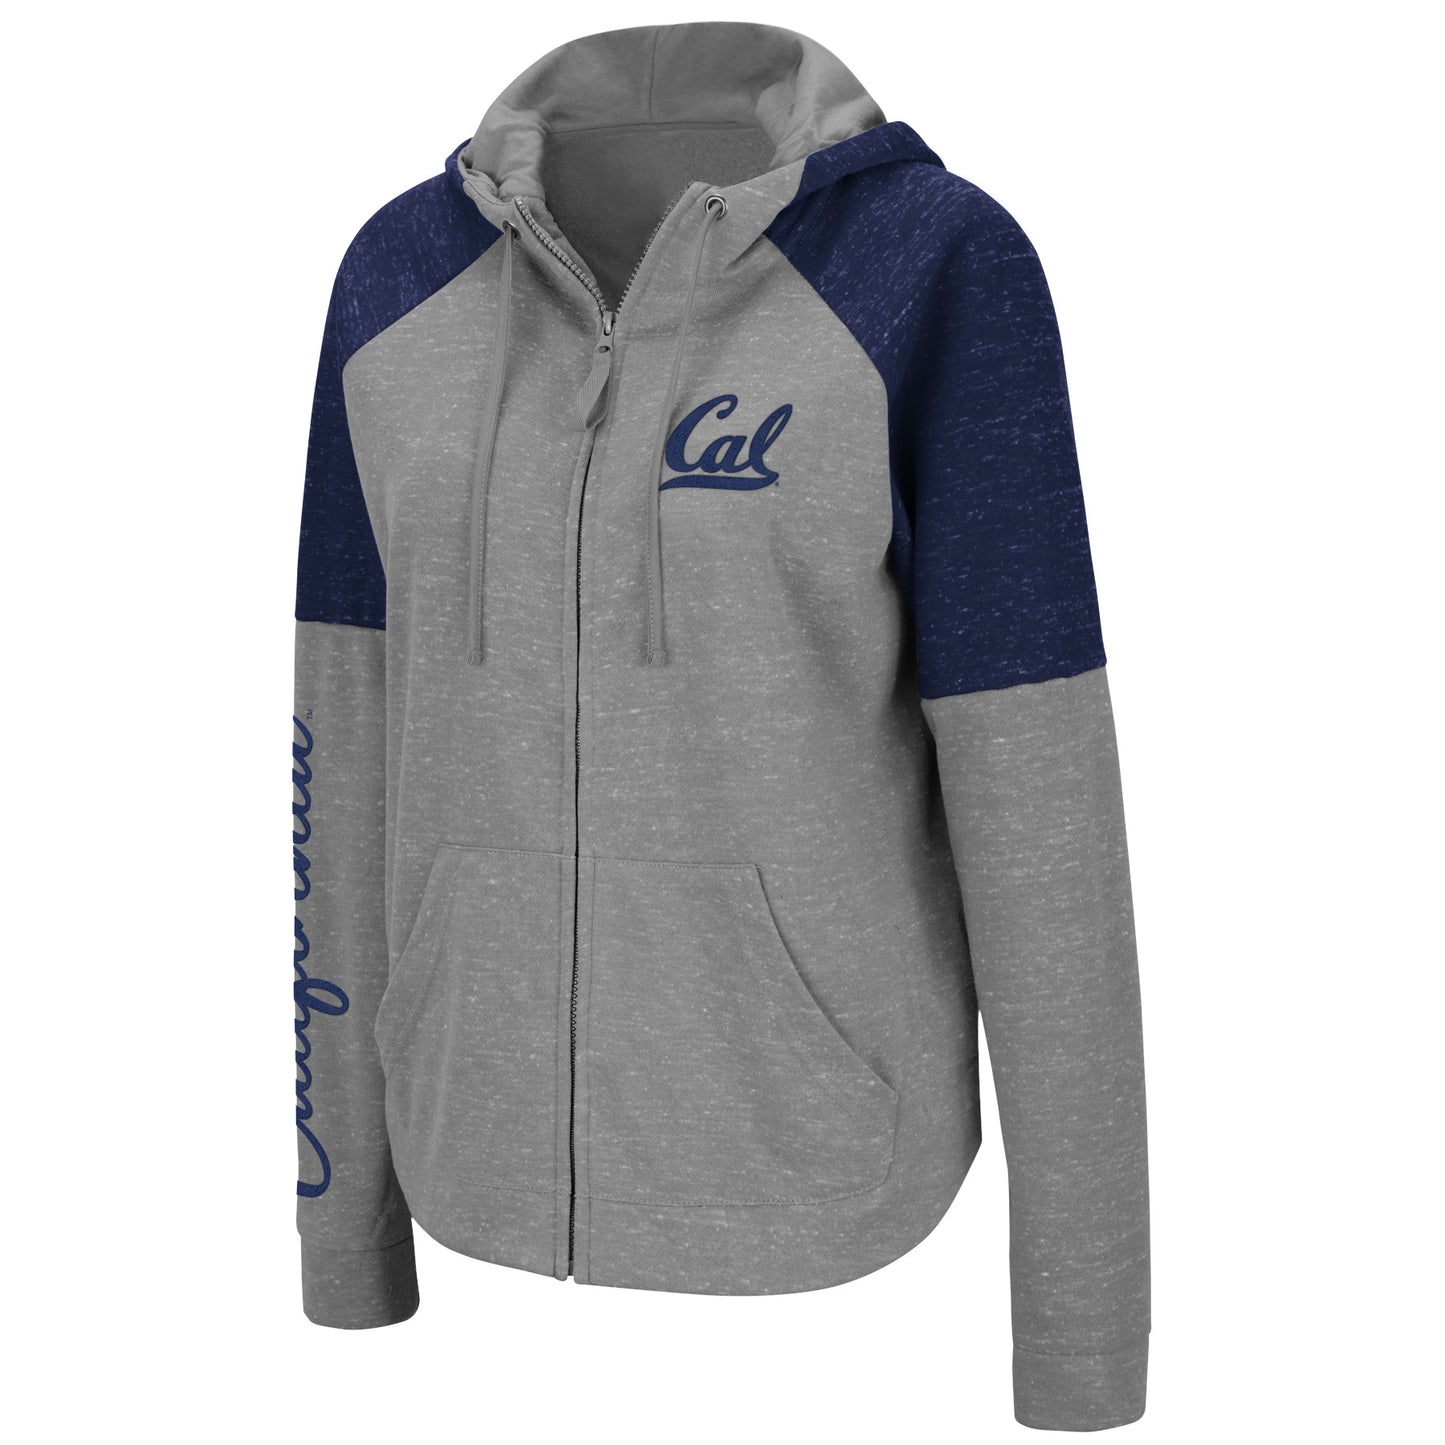 U.C. Berkeley Cal embroidered women's hoodie sweatshirt-Shop College Wear